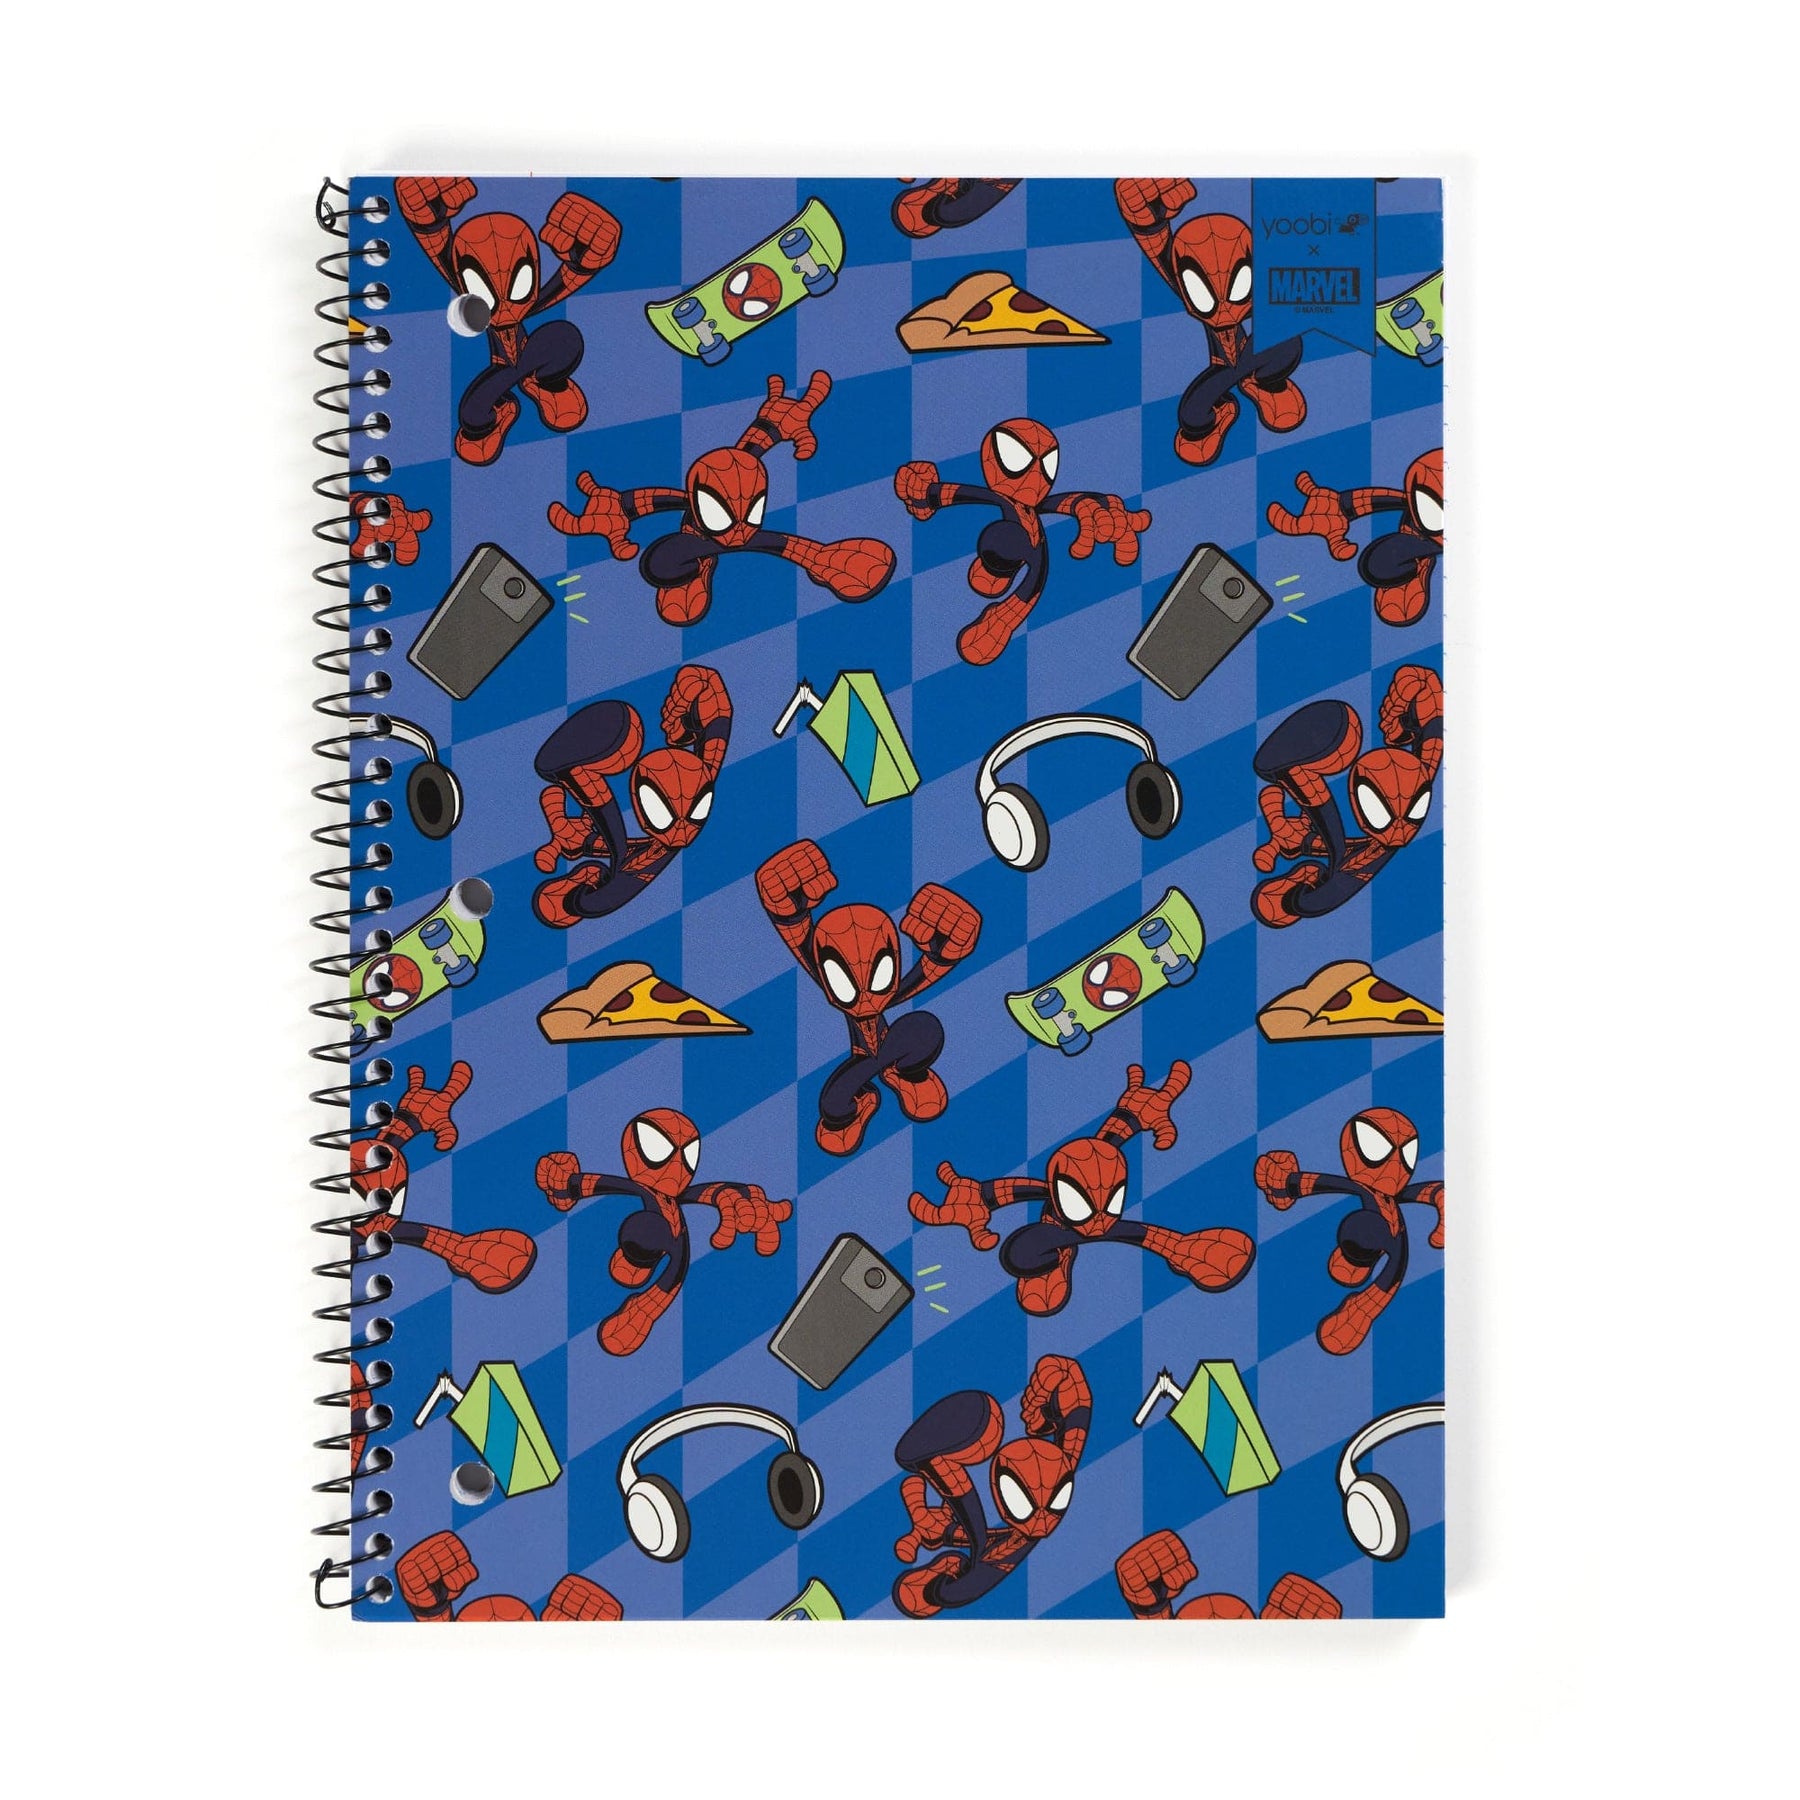 Yoobi x Marvel Spider-Man Skate Spiral Notebook